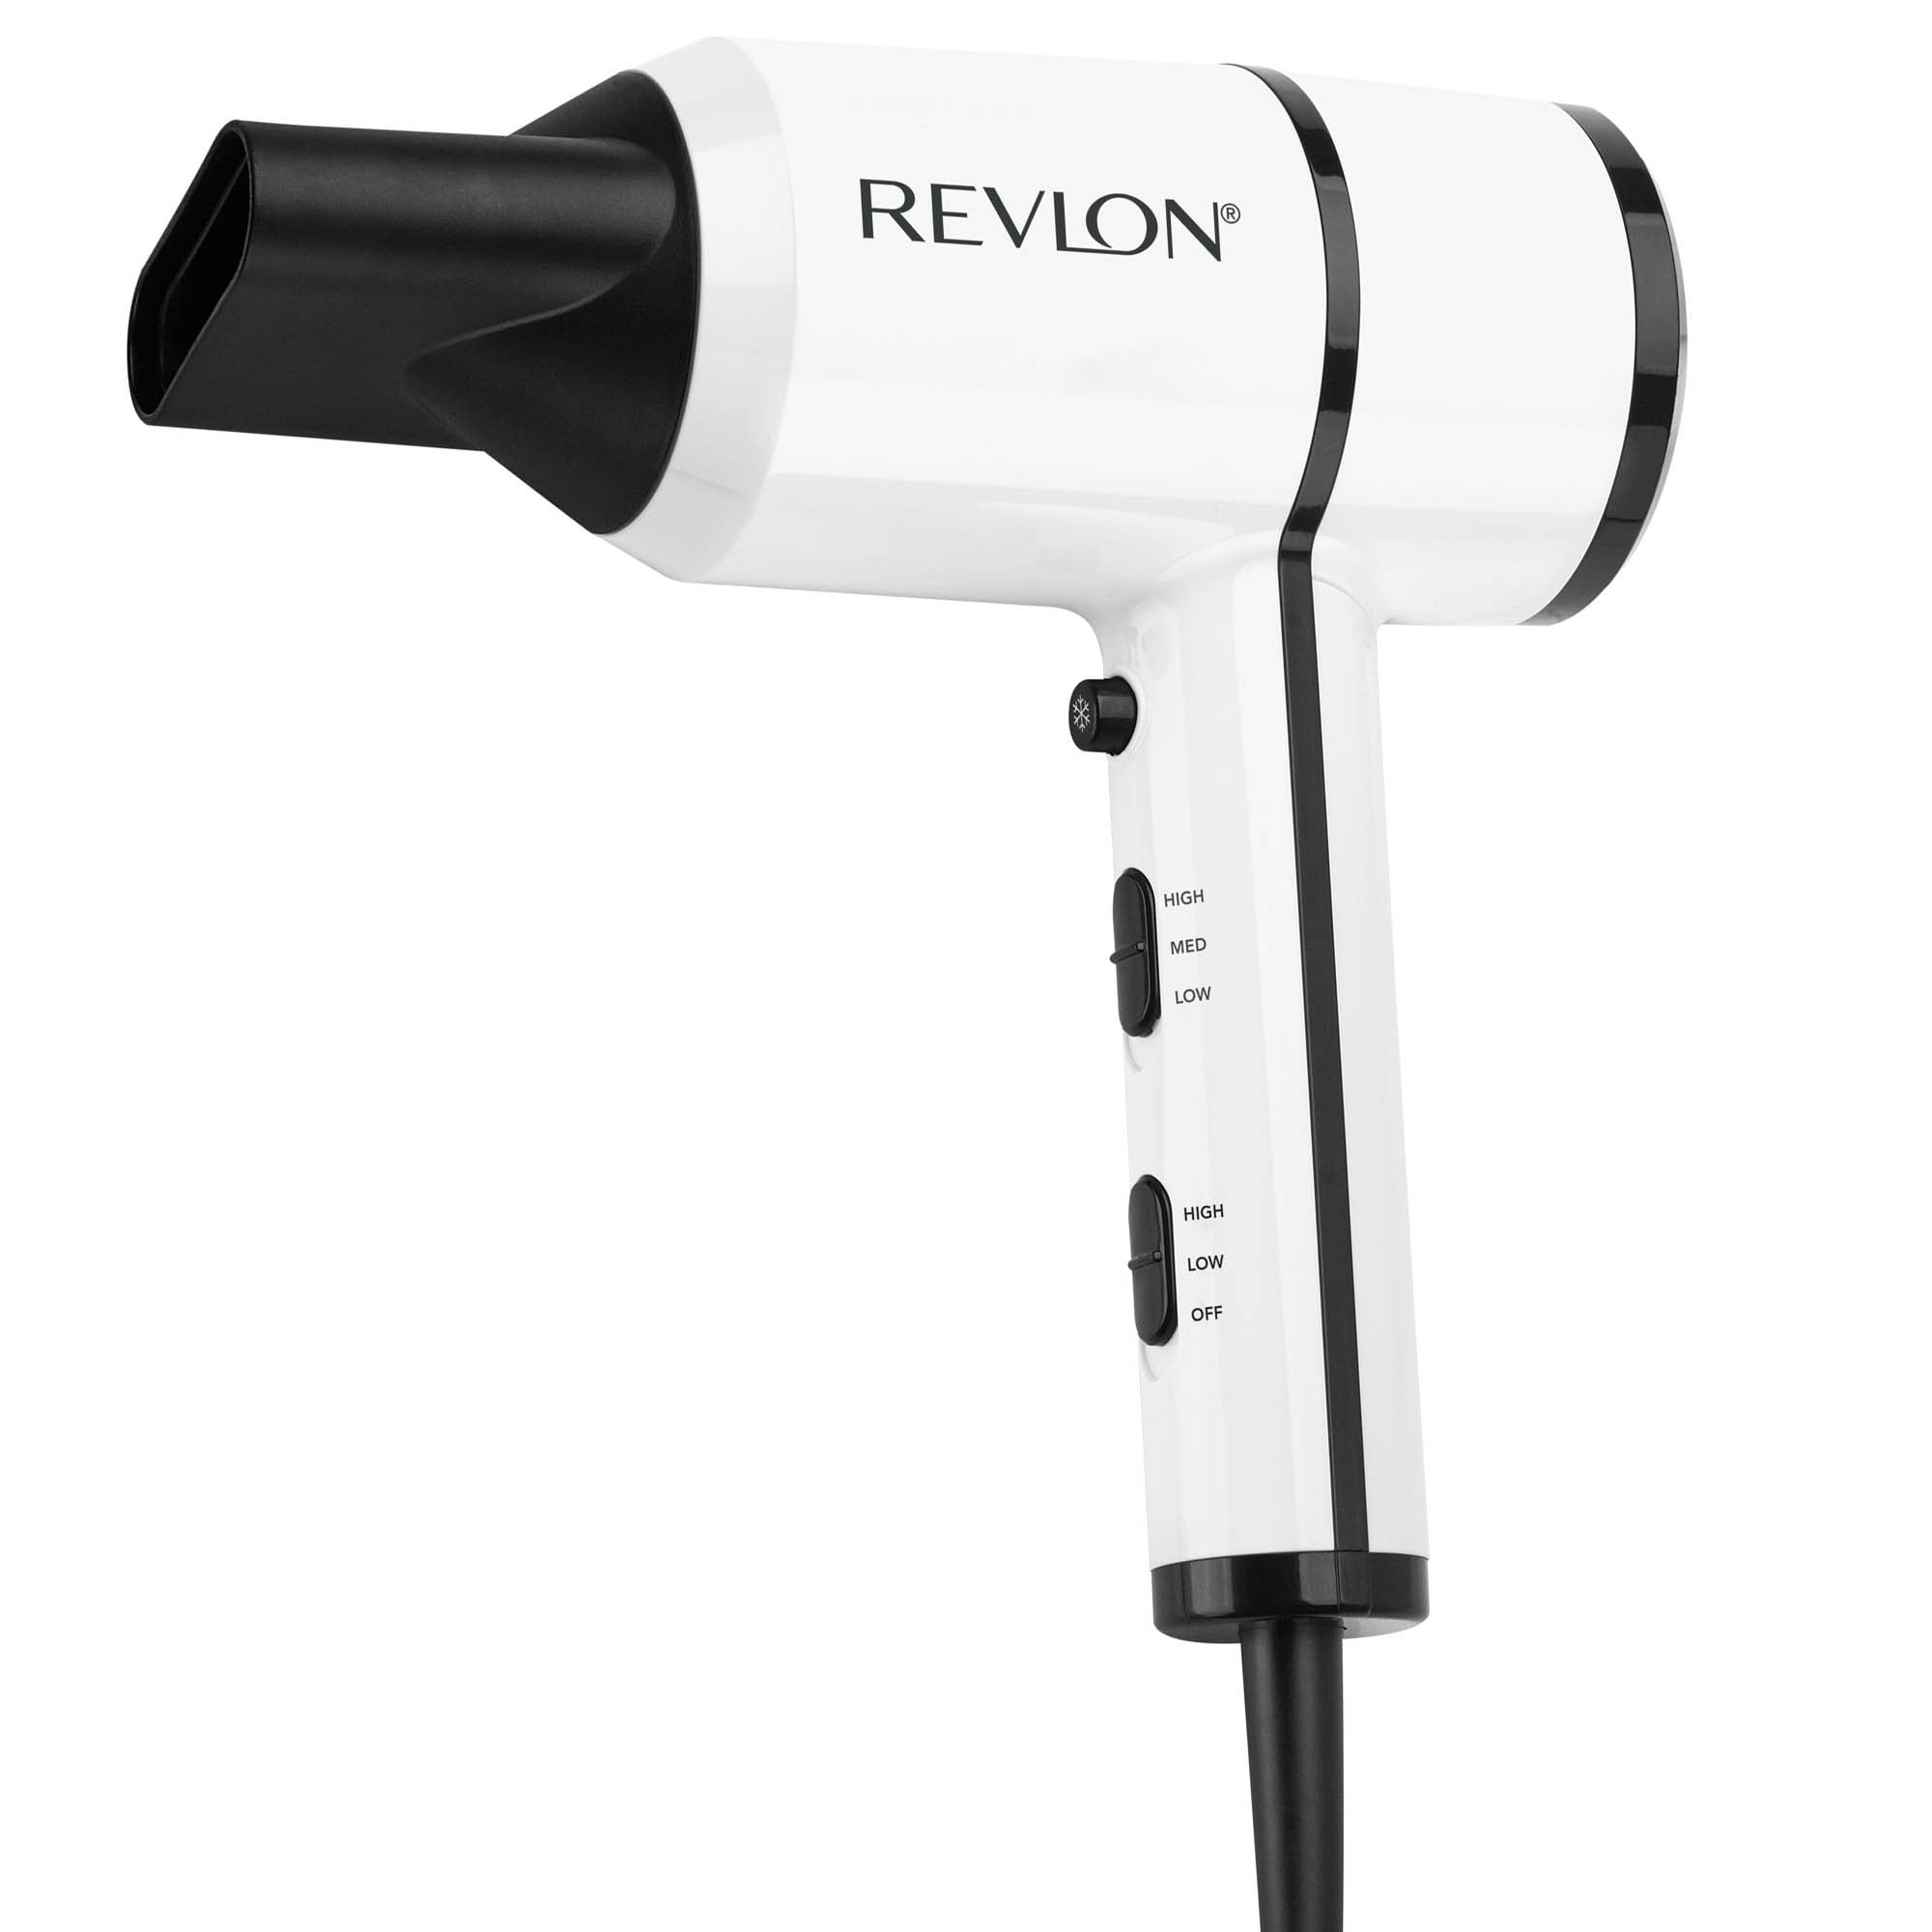 Revlon 1875W Crystal C + Ceramic Compact Hair Dryer $13.98 + Free S&H w/ Walmart+ or $35+